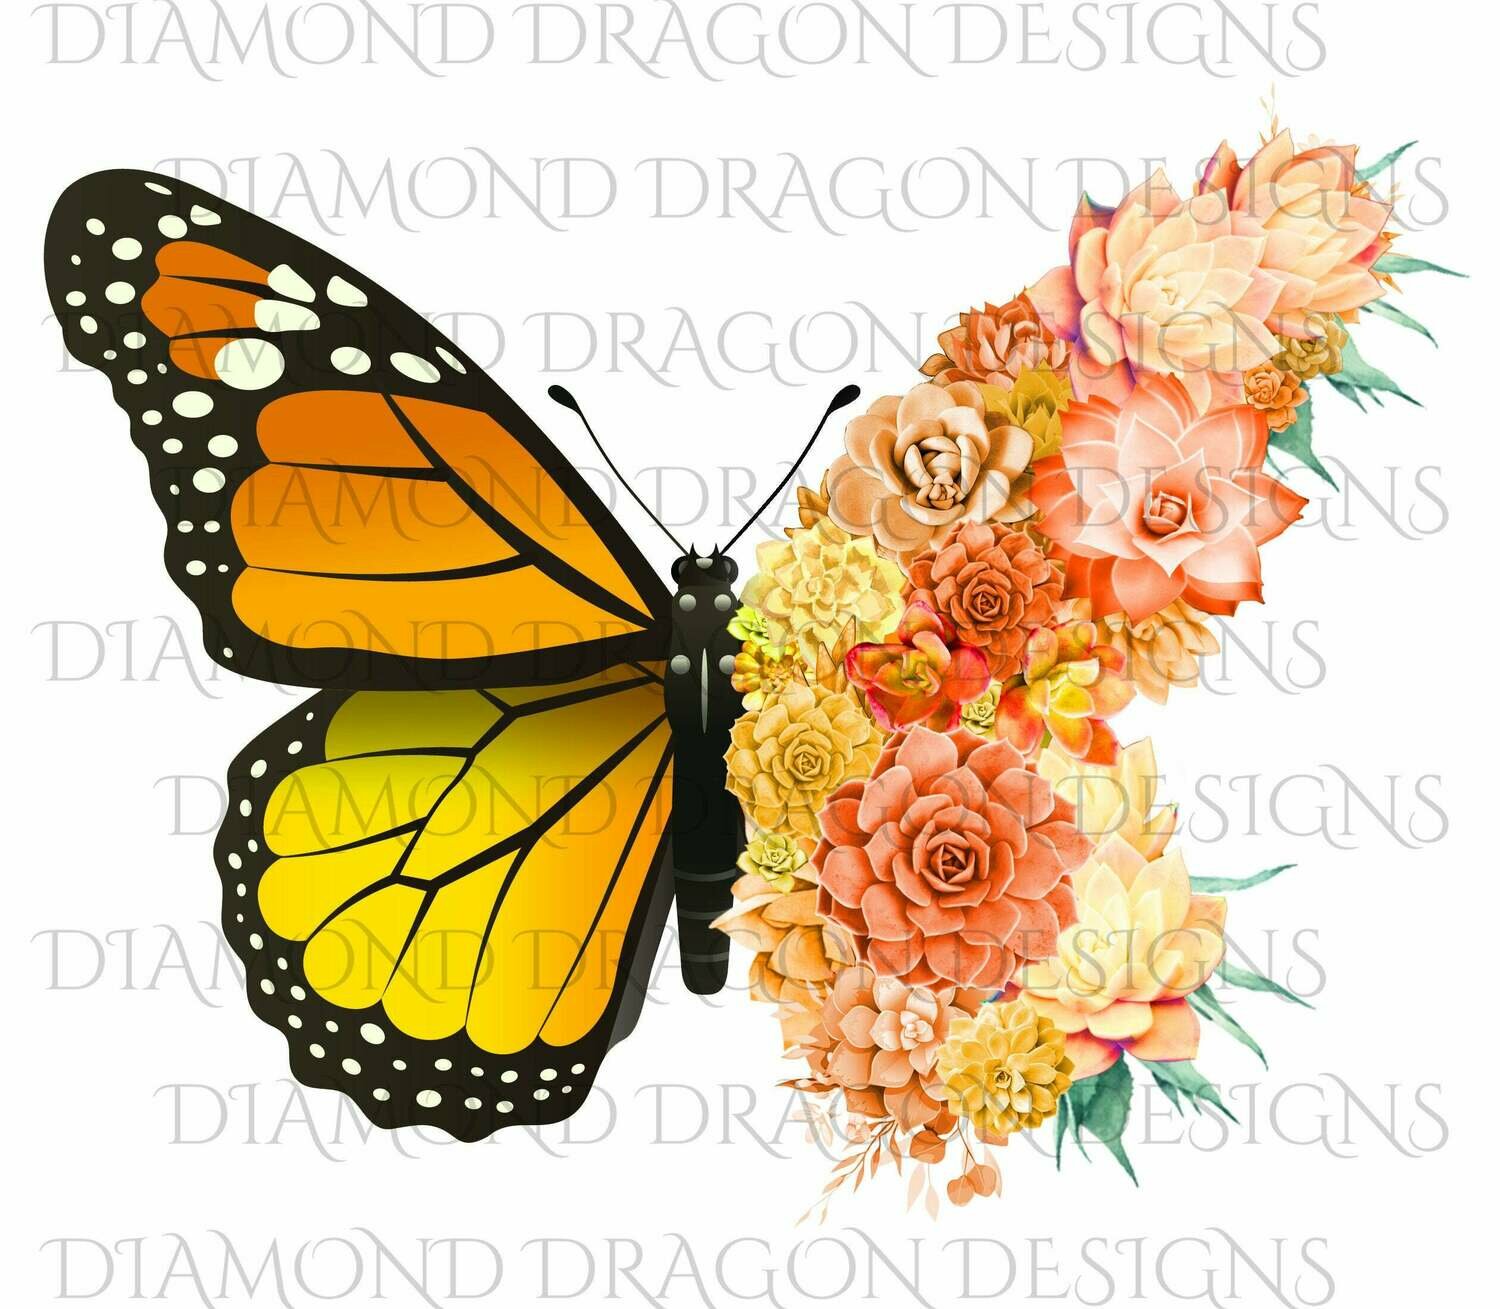 Butterflies - Succulent Butterfly, Orange Monarch Butterfly, Watercolor Butterfly, Butterfly with Succulents, Digital Image